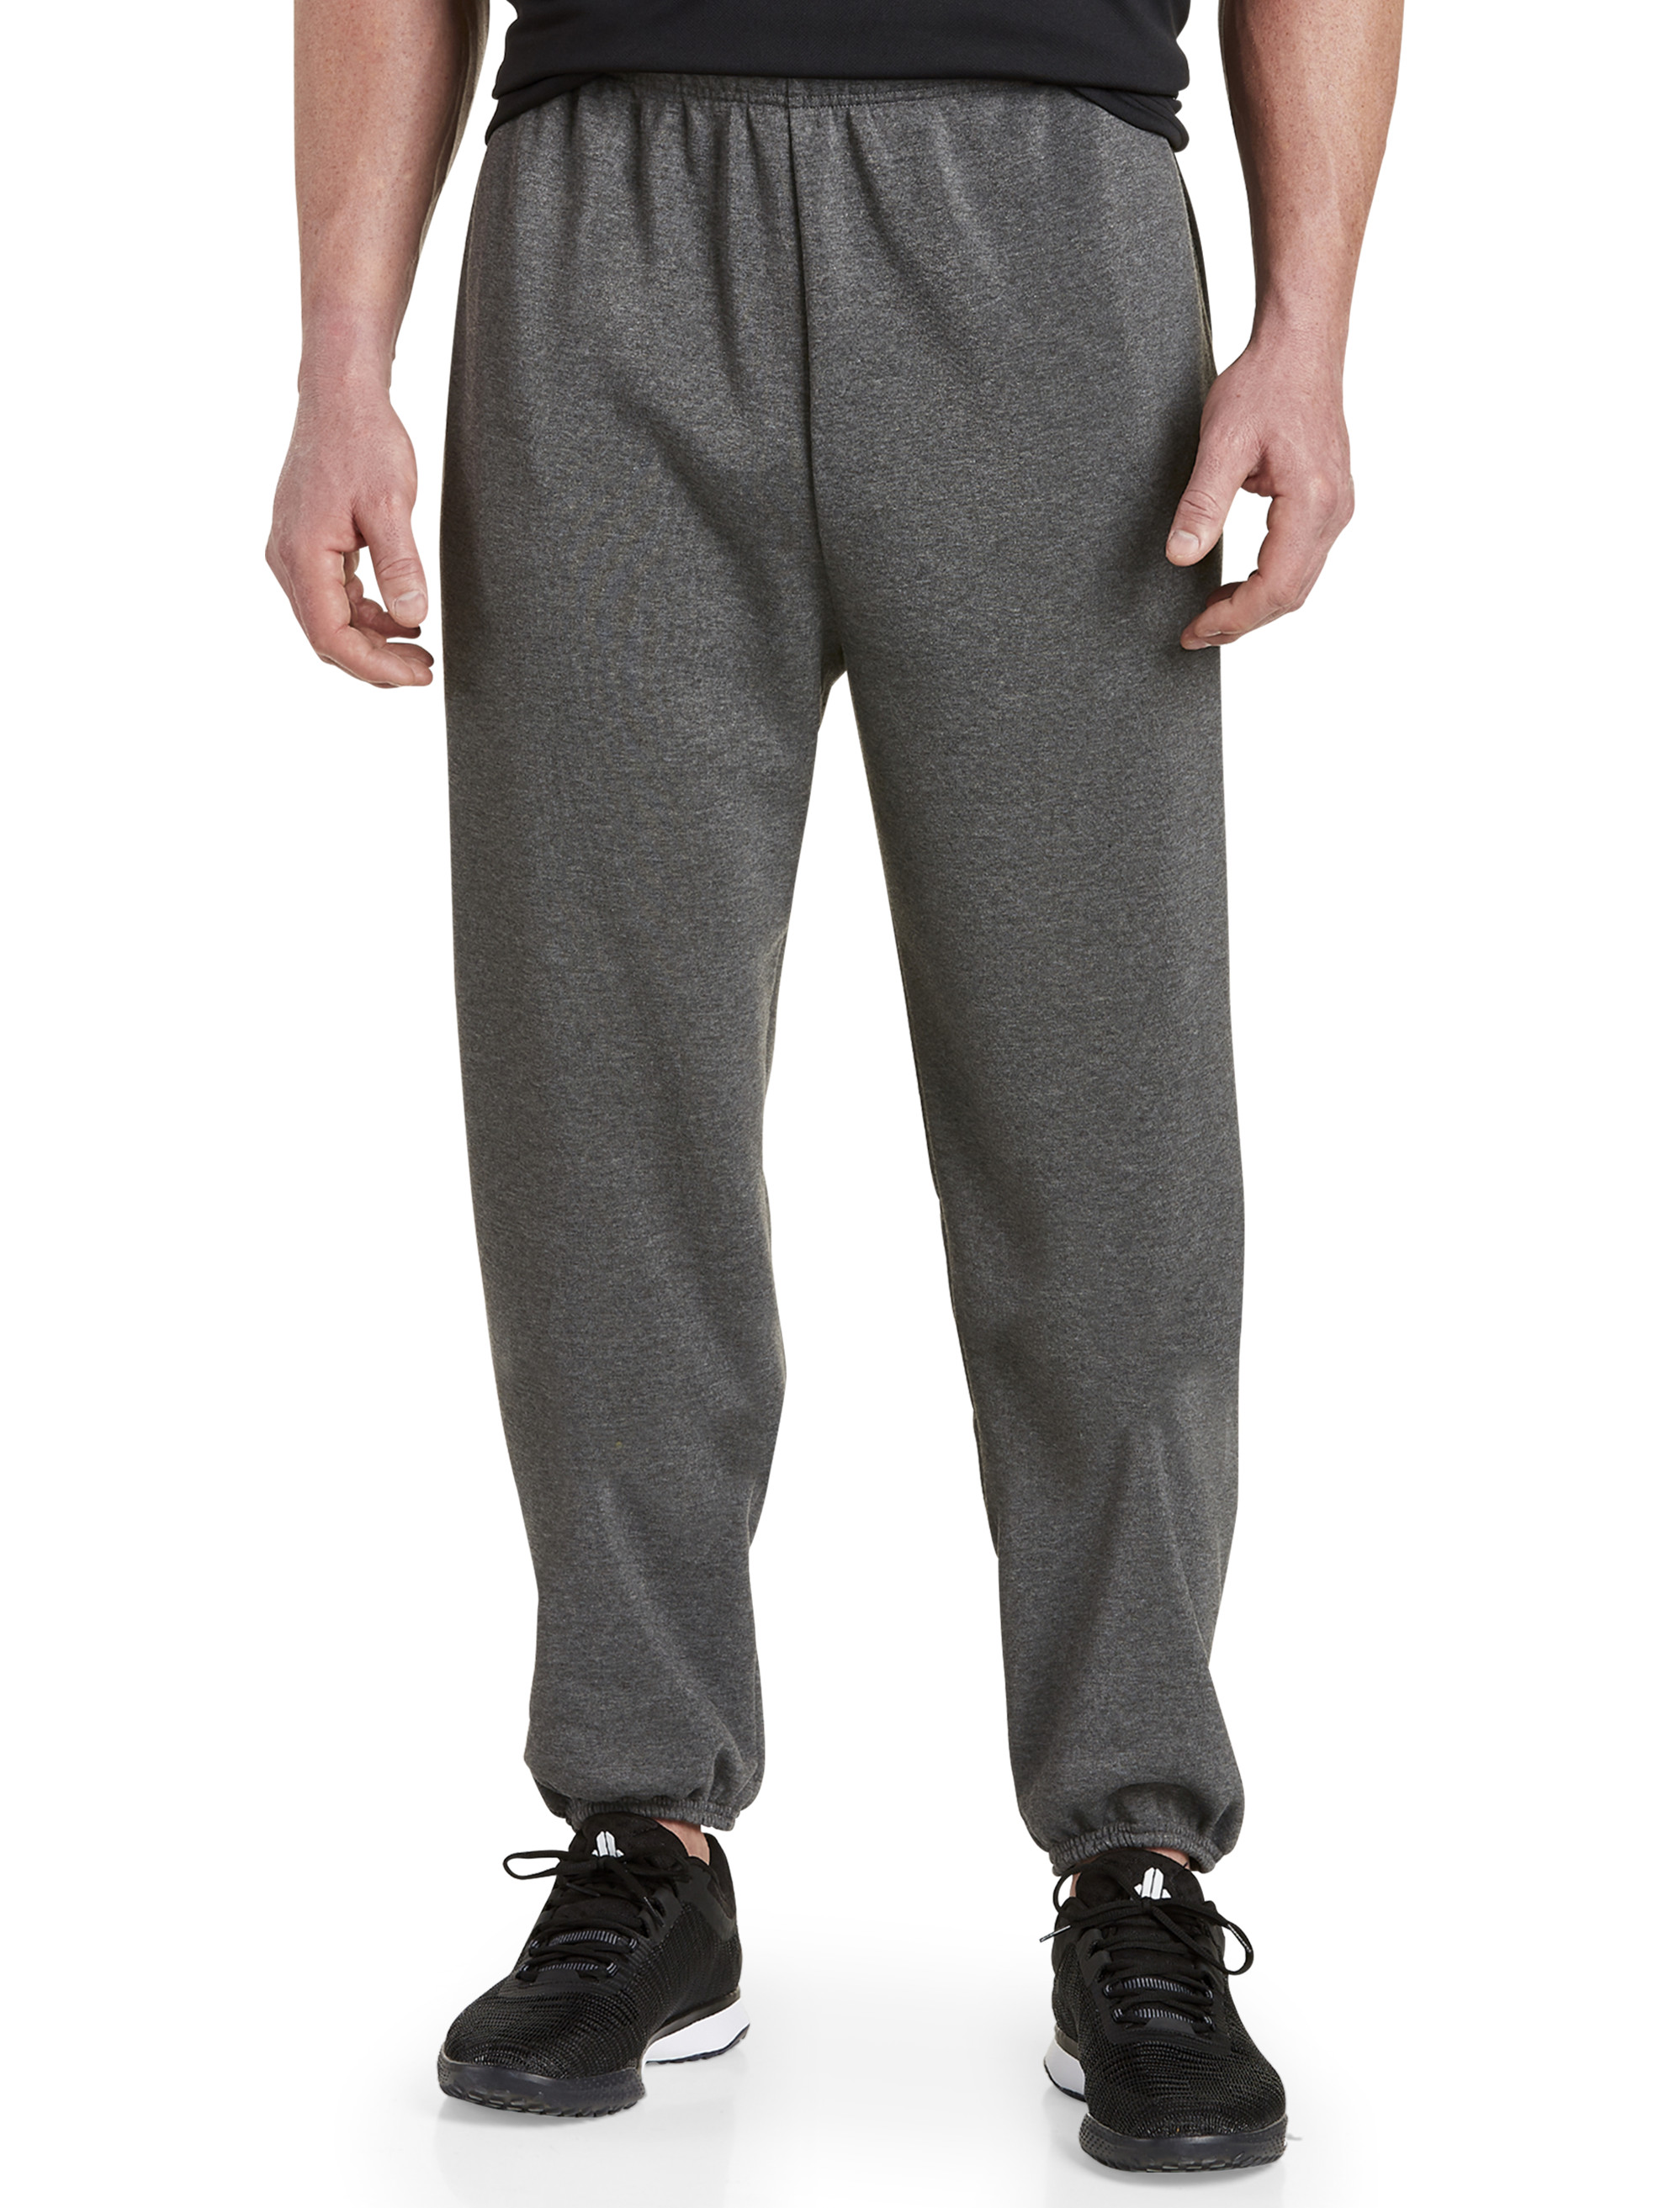 Reebok PlayDry Fleece Pants Casual Male XL Big & Tall | eBay